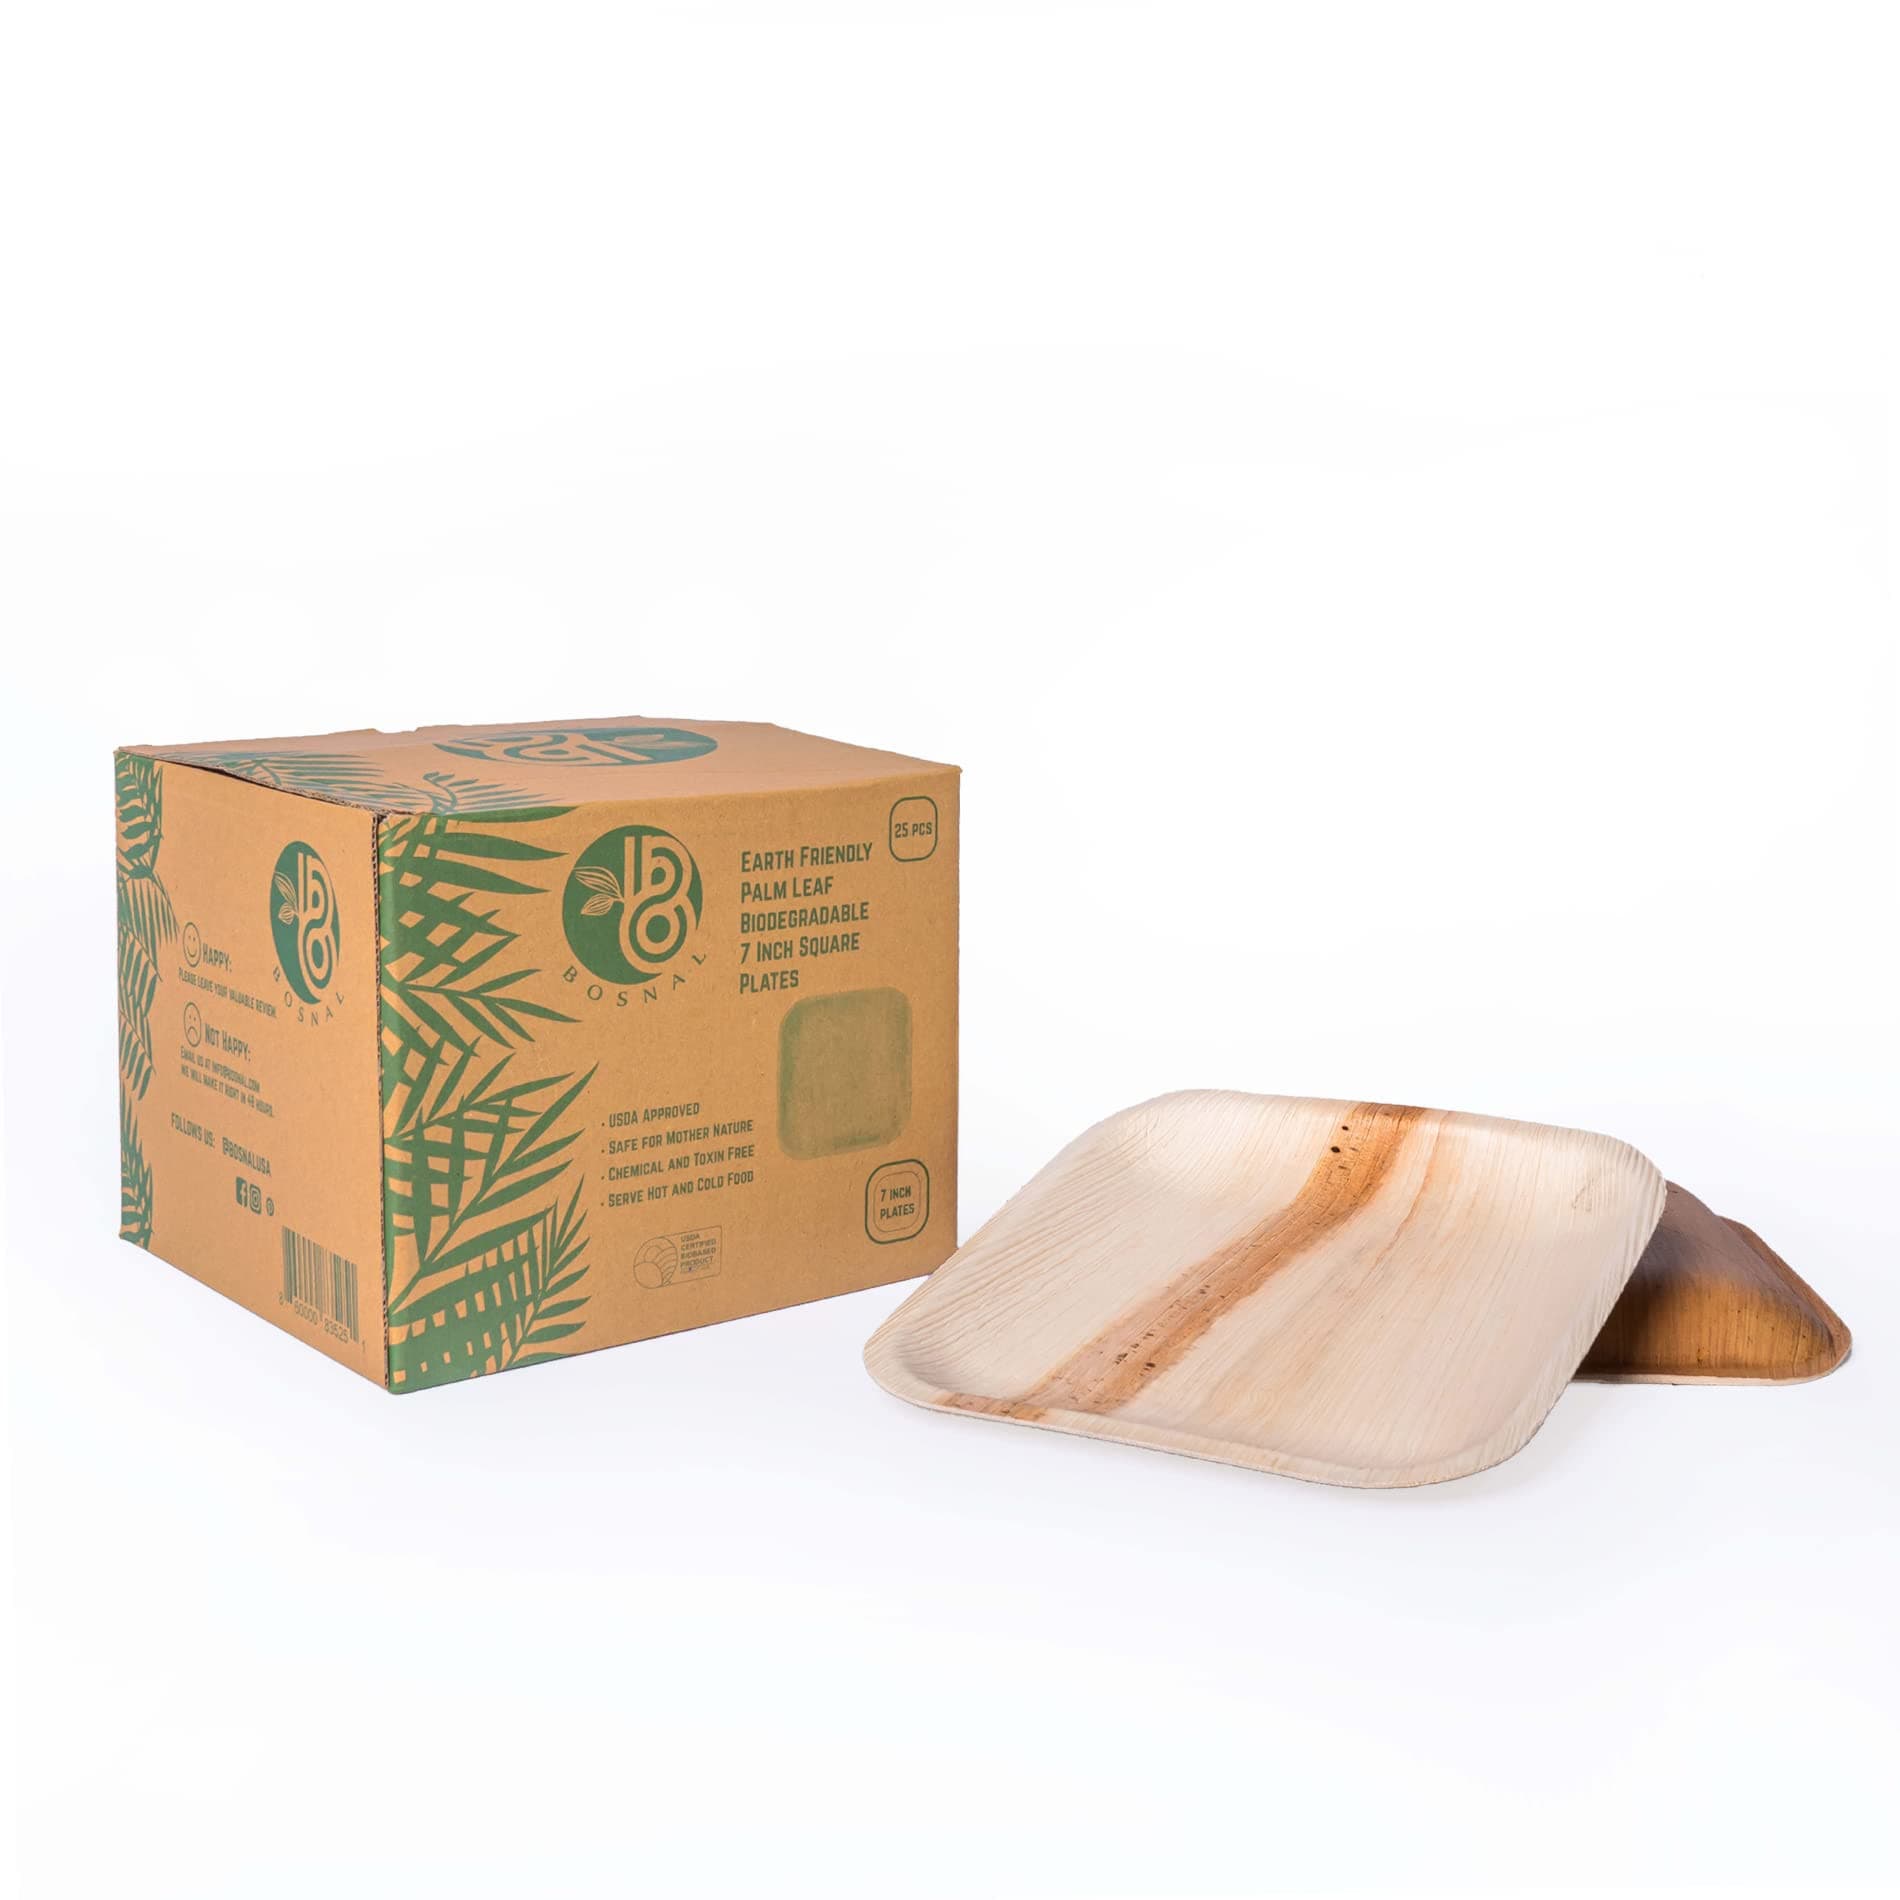 Bosnal - Palm Leaf Biodegradable Plates; 7 inch, Square, 25 Pcs.